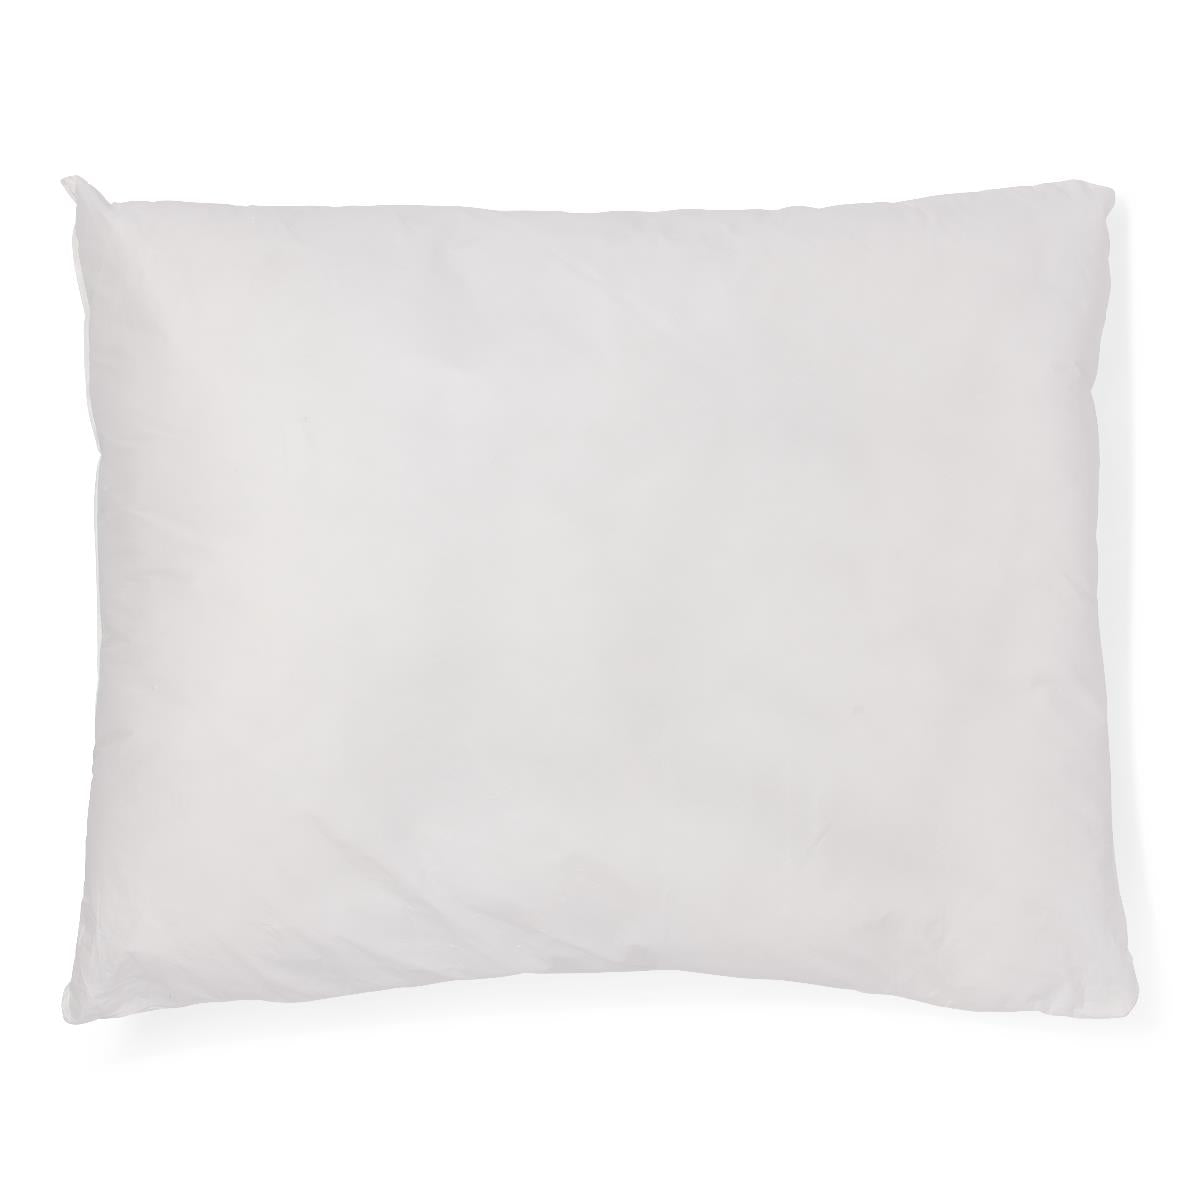 Ovation Pillows (Bag of 2)